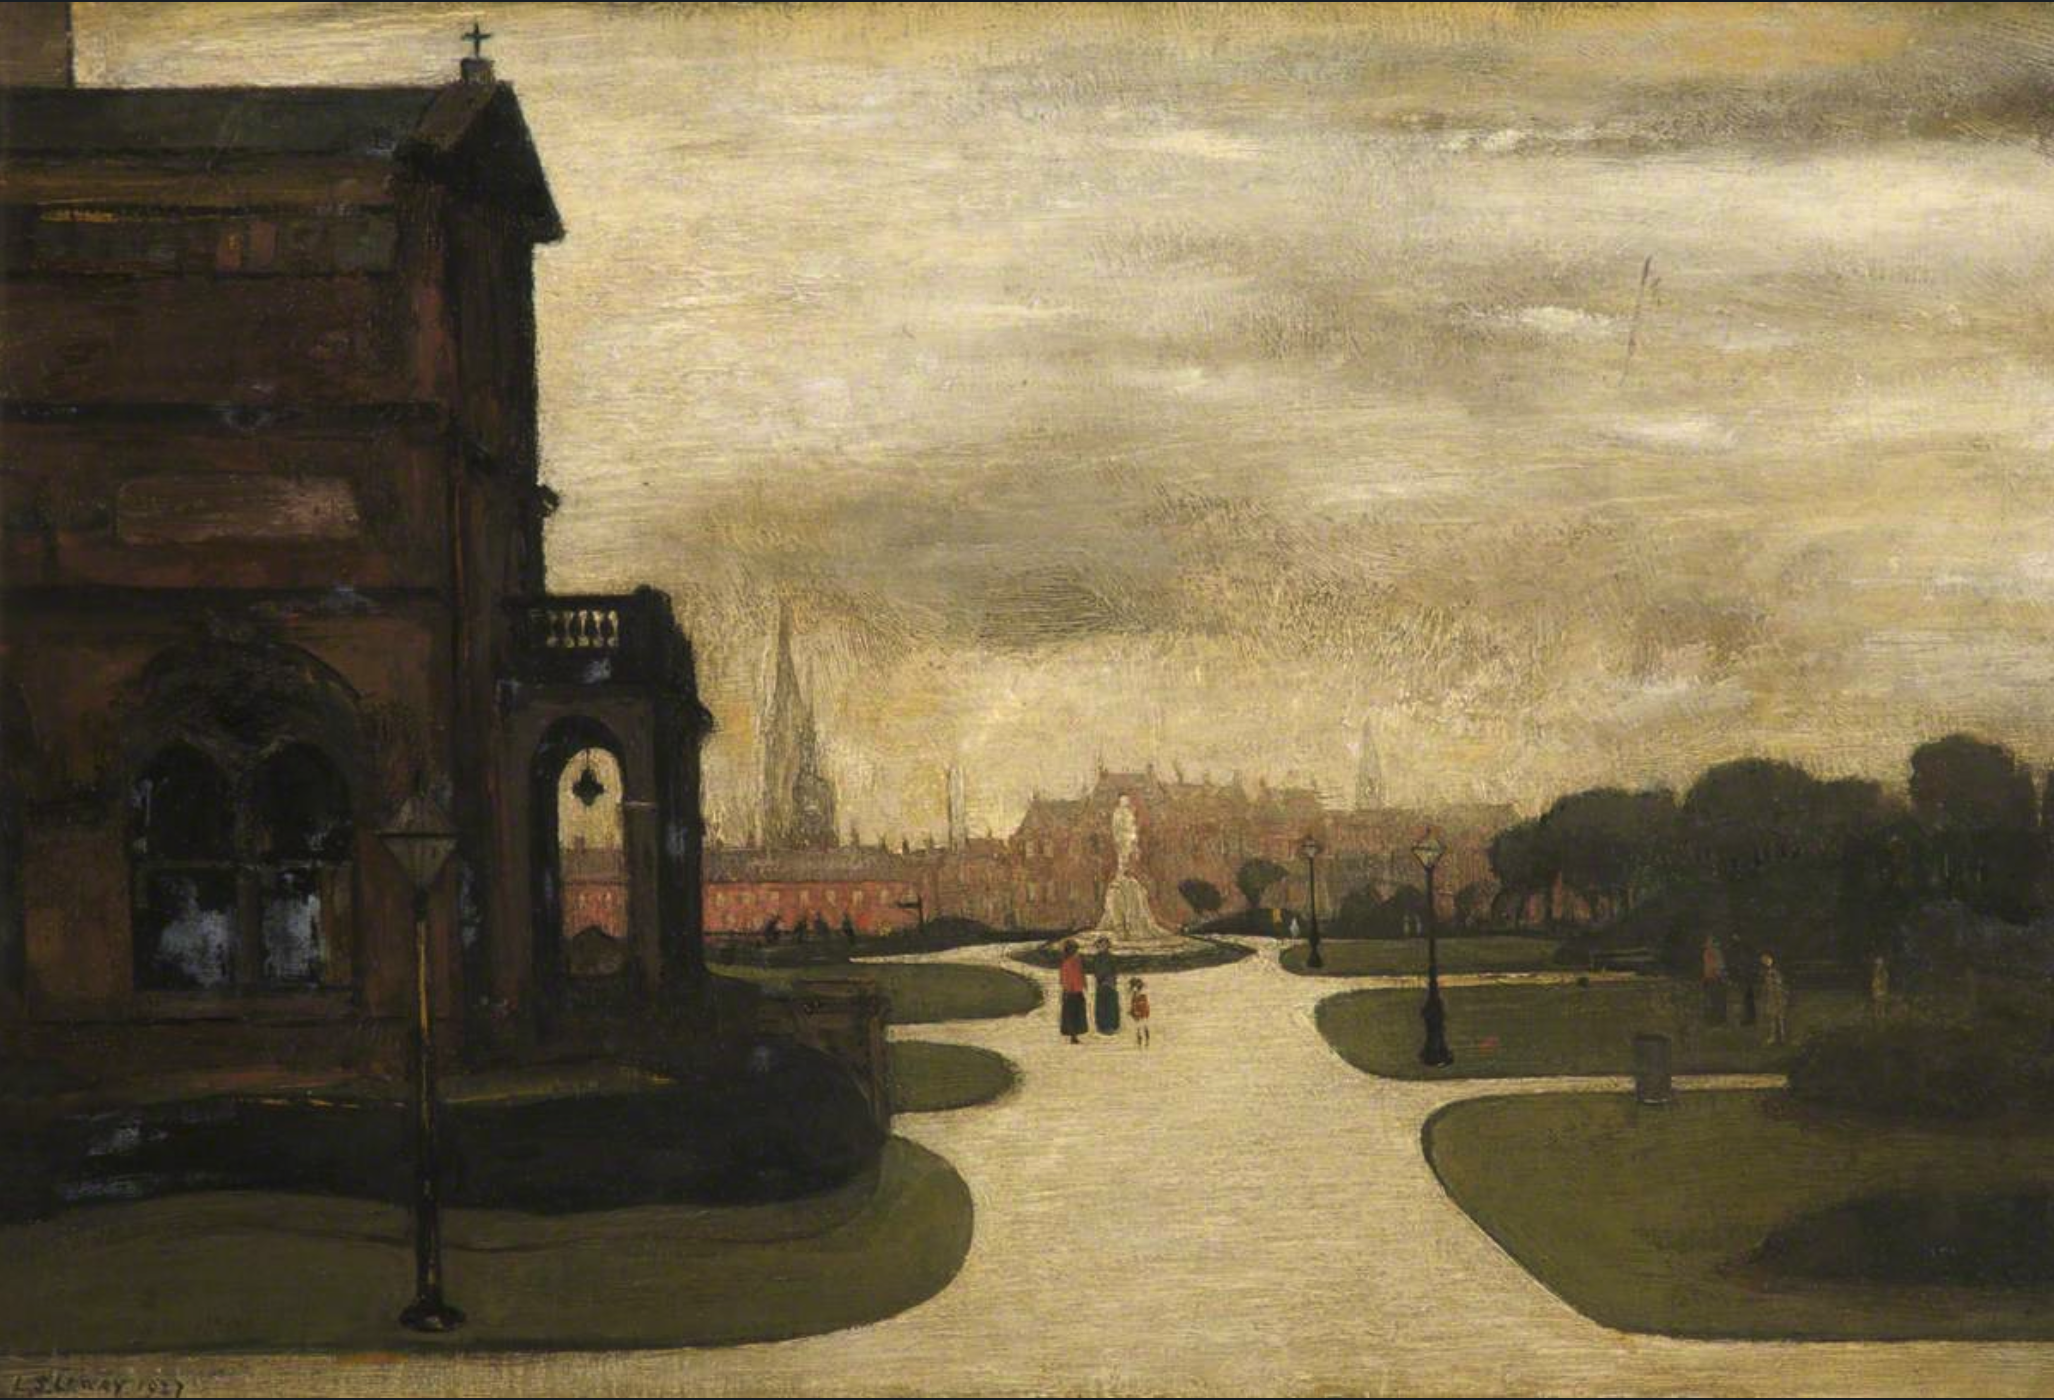 Peel Park, Salford (1927) by Laurence Stephen Lowry (1887 - 1976), English artist.